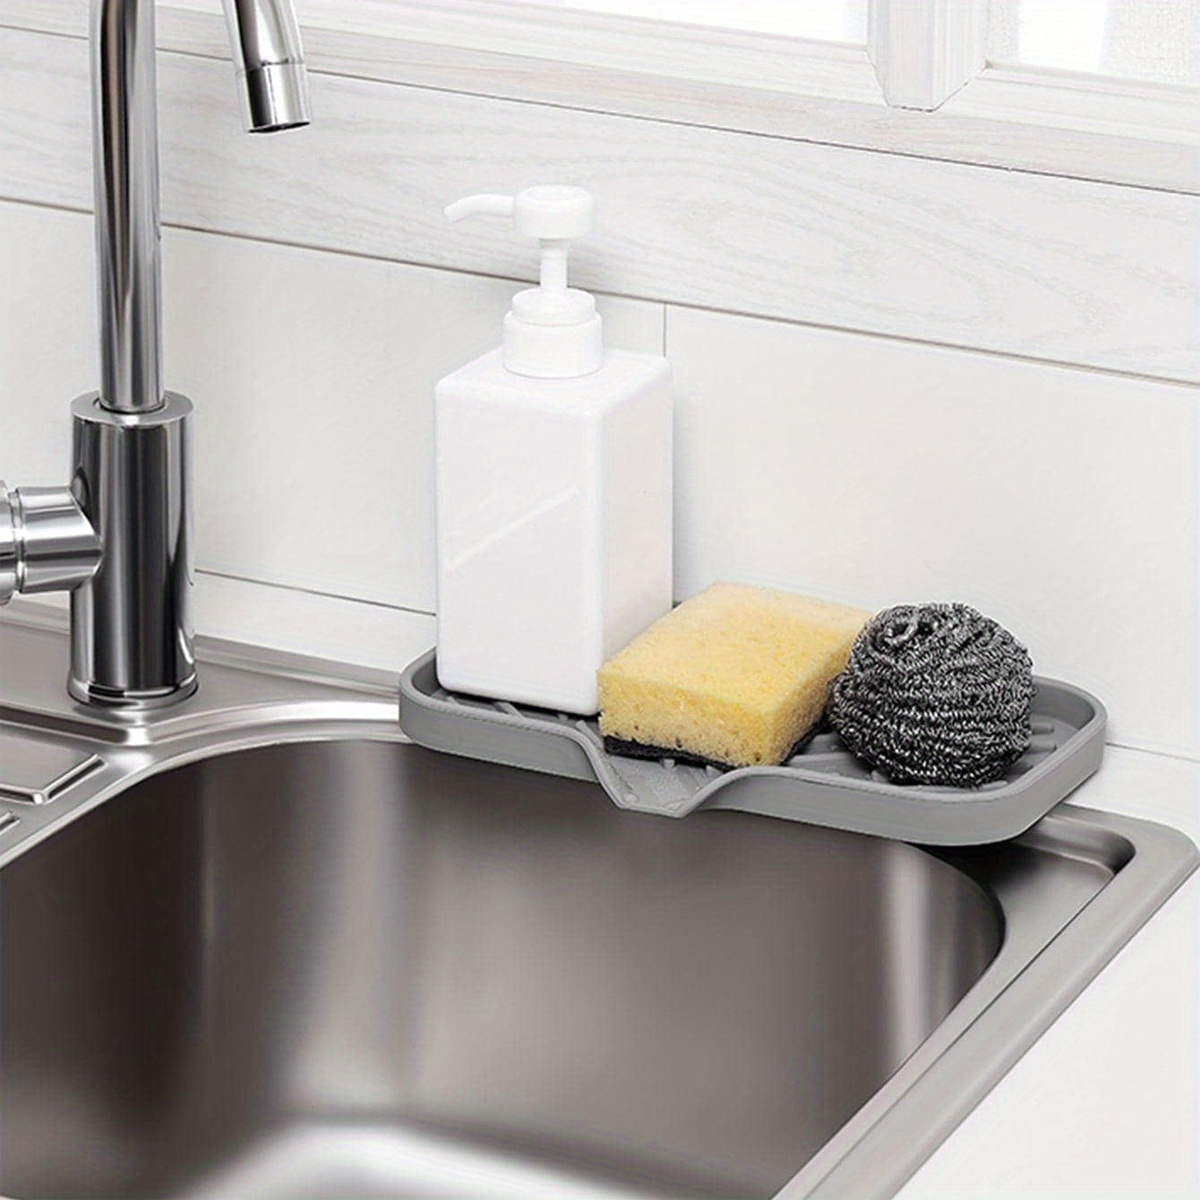 Silicone Sponge Holder Kitchen Sink Organizer Tray Dish Caddy Soap  Dispenser, Scrubber Spoon Holder, Dishwashing AccessoriesGray,1 Pack